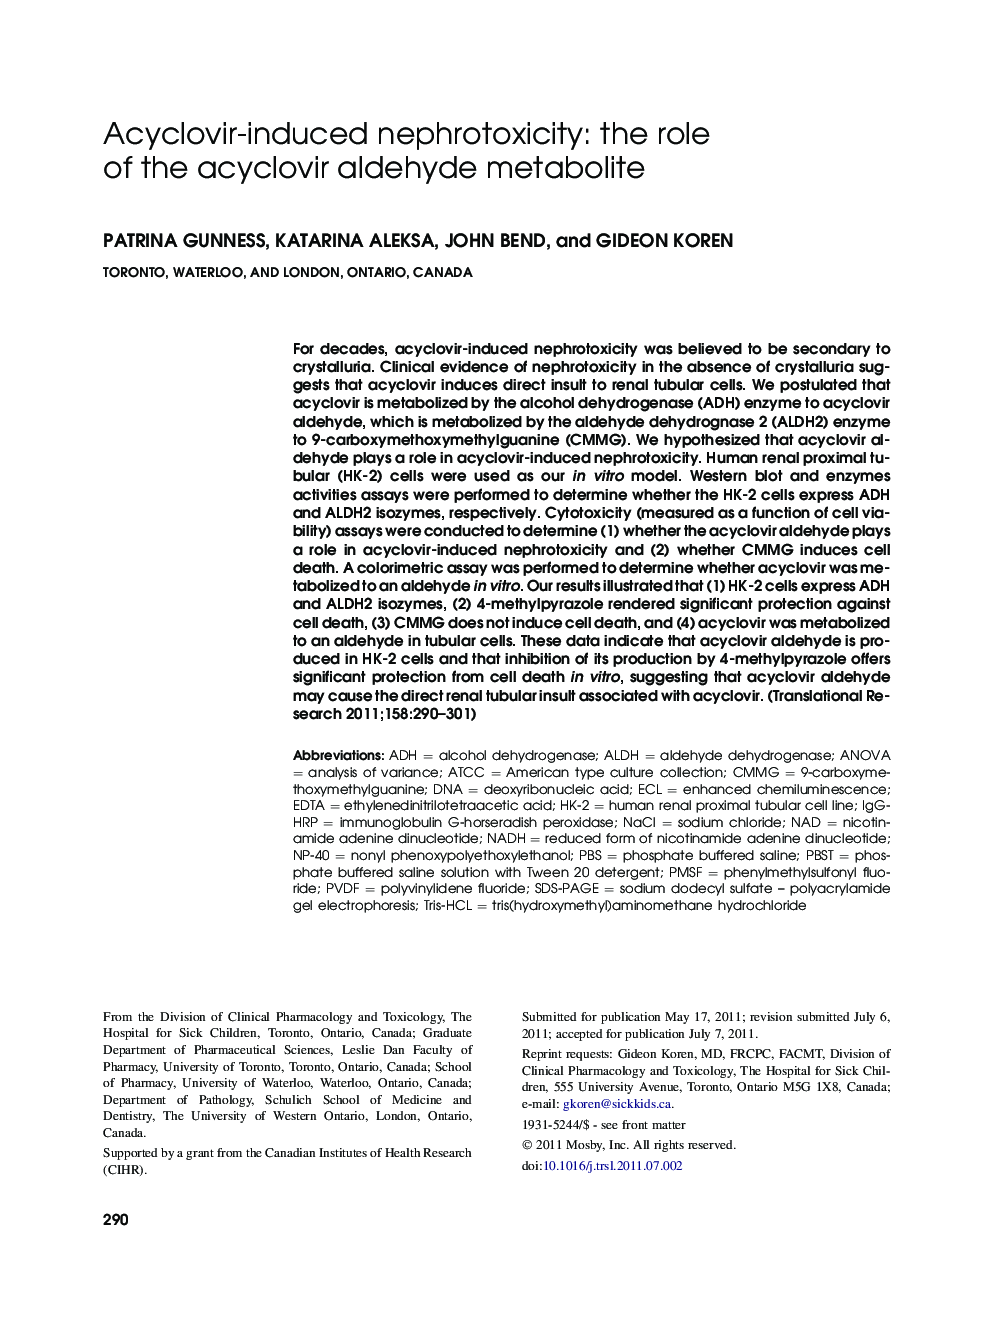 Acyclovir-induced nephrotoxicity: the role of the acyclovir aldehyde metabolite 